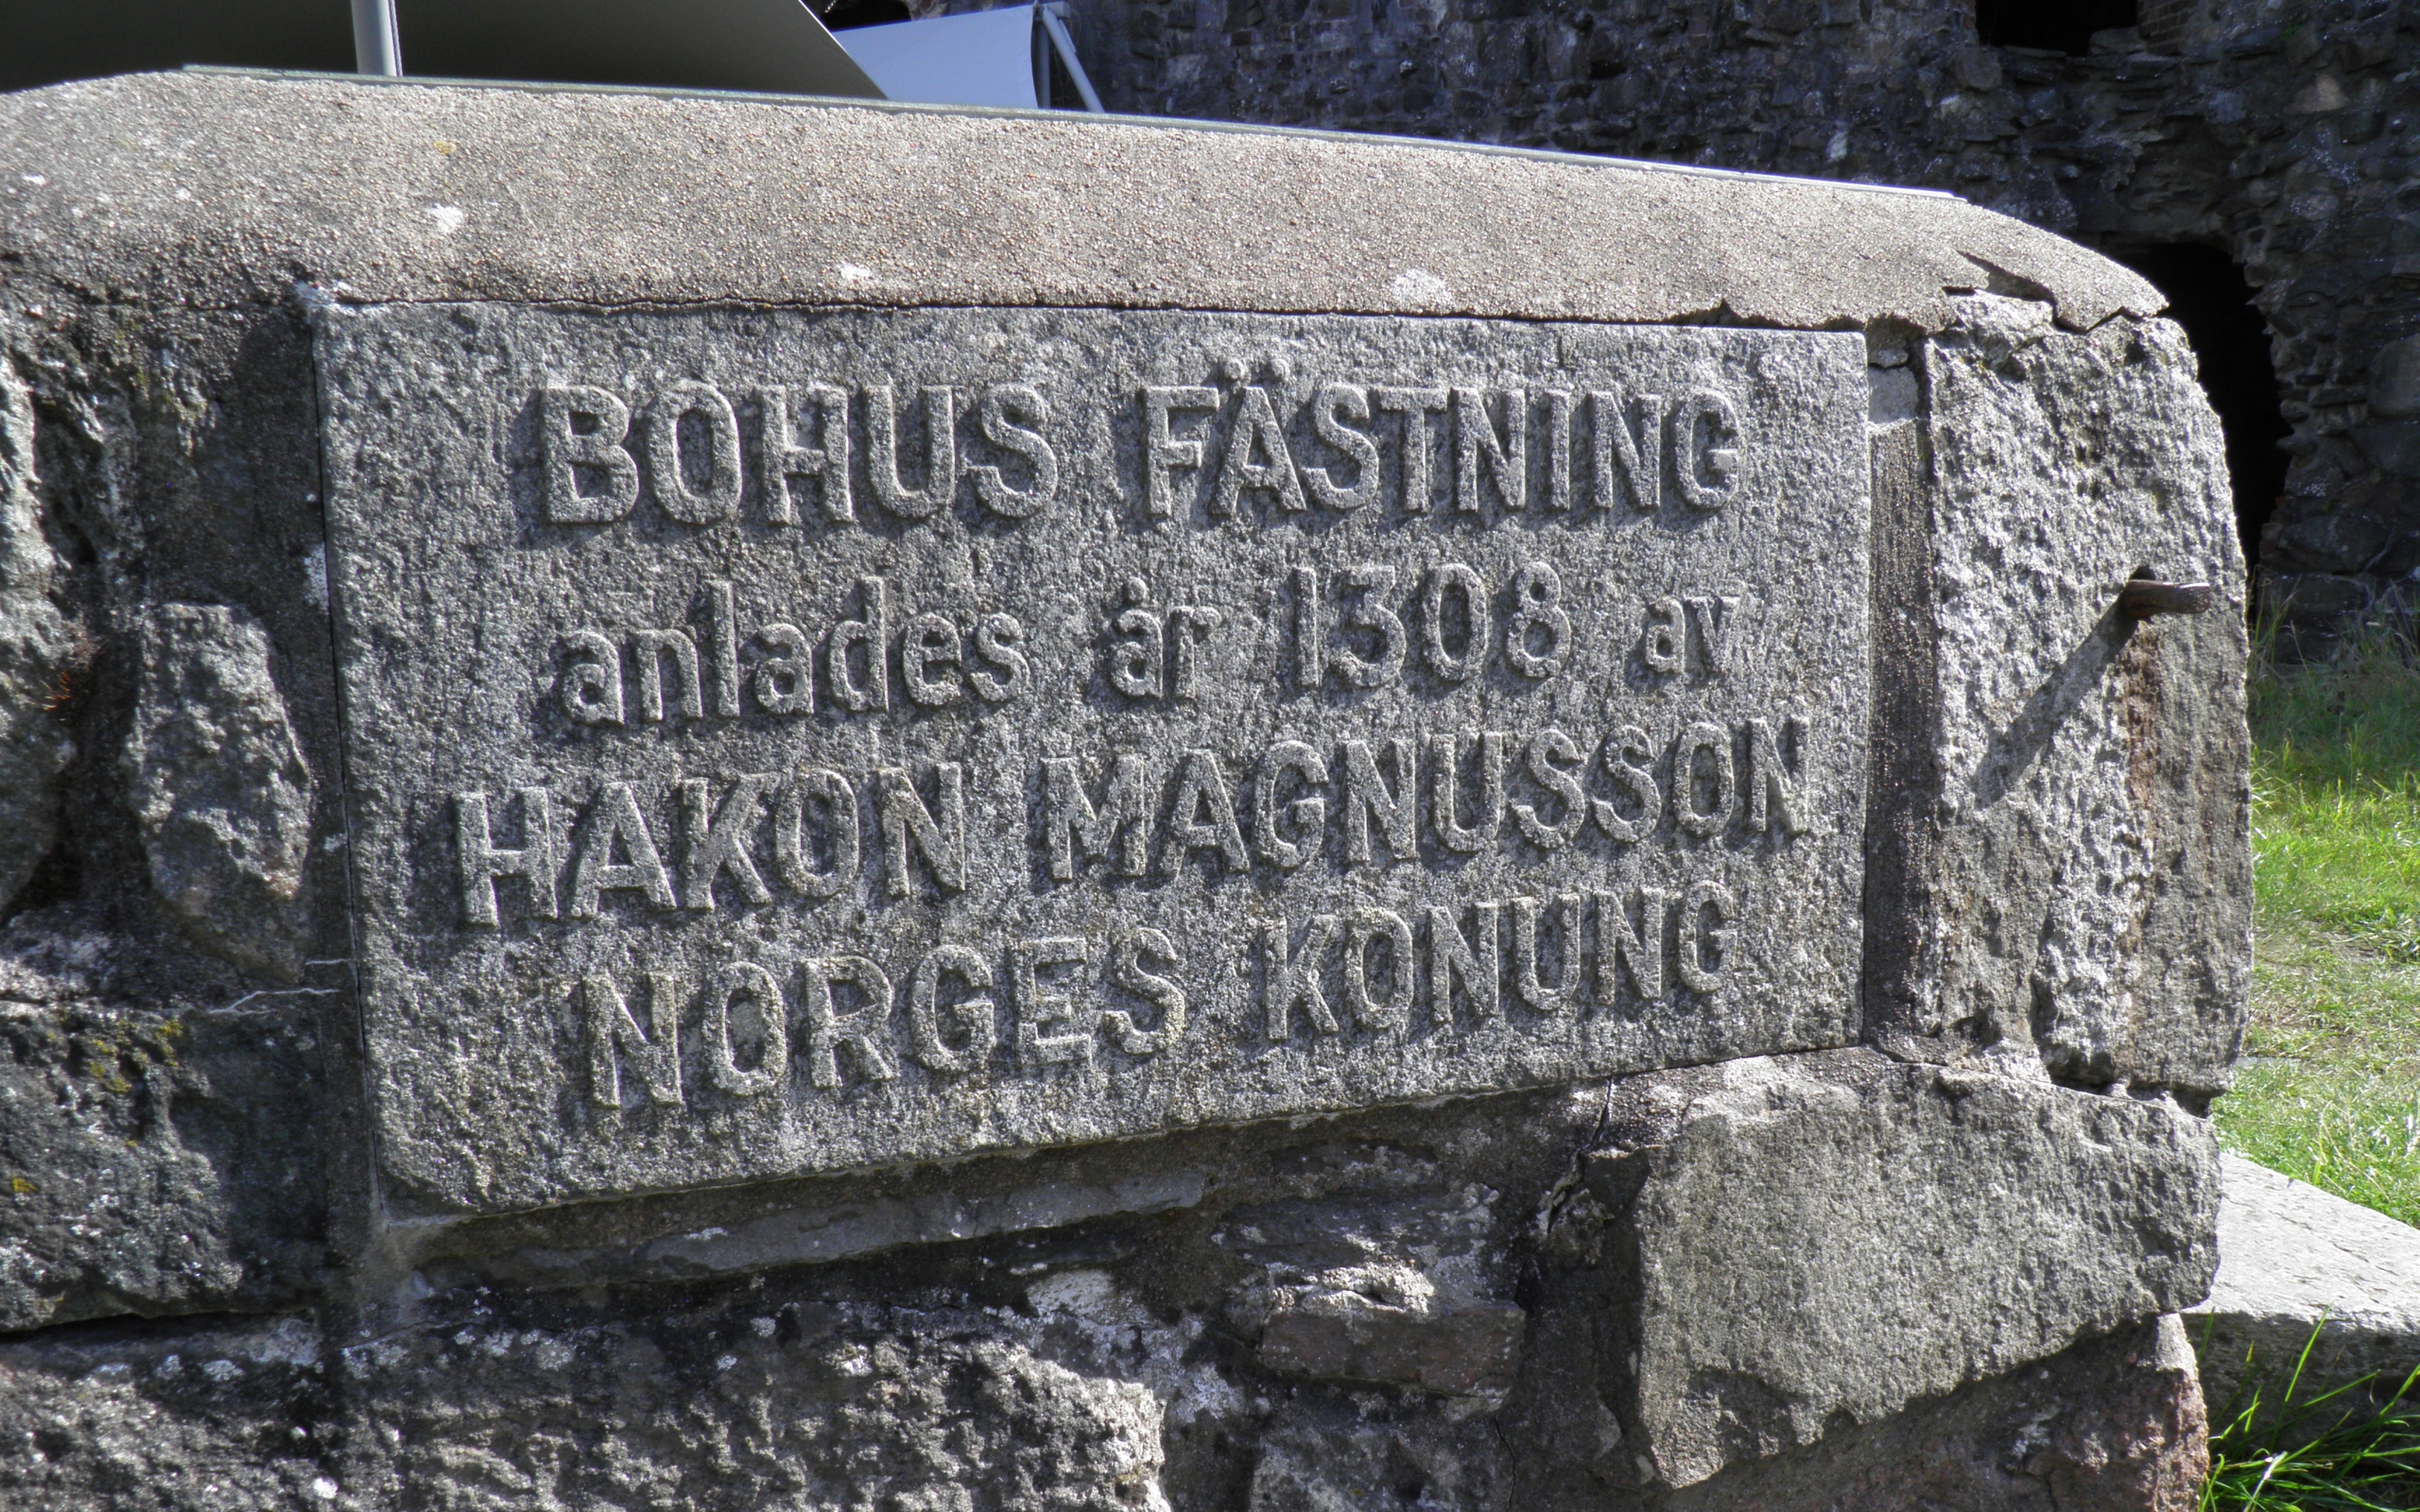 Bohus Fortress #18